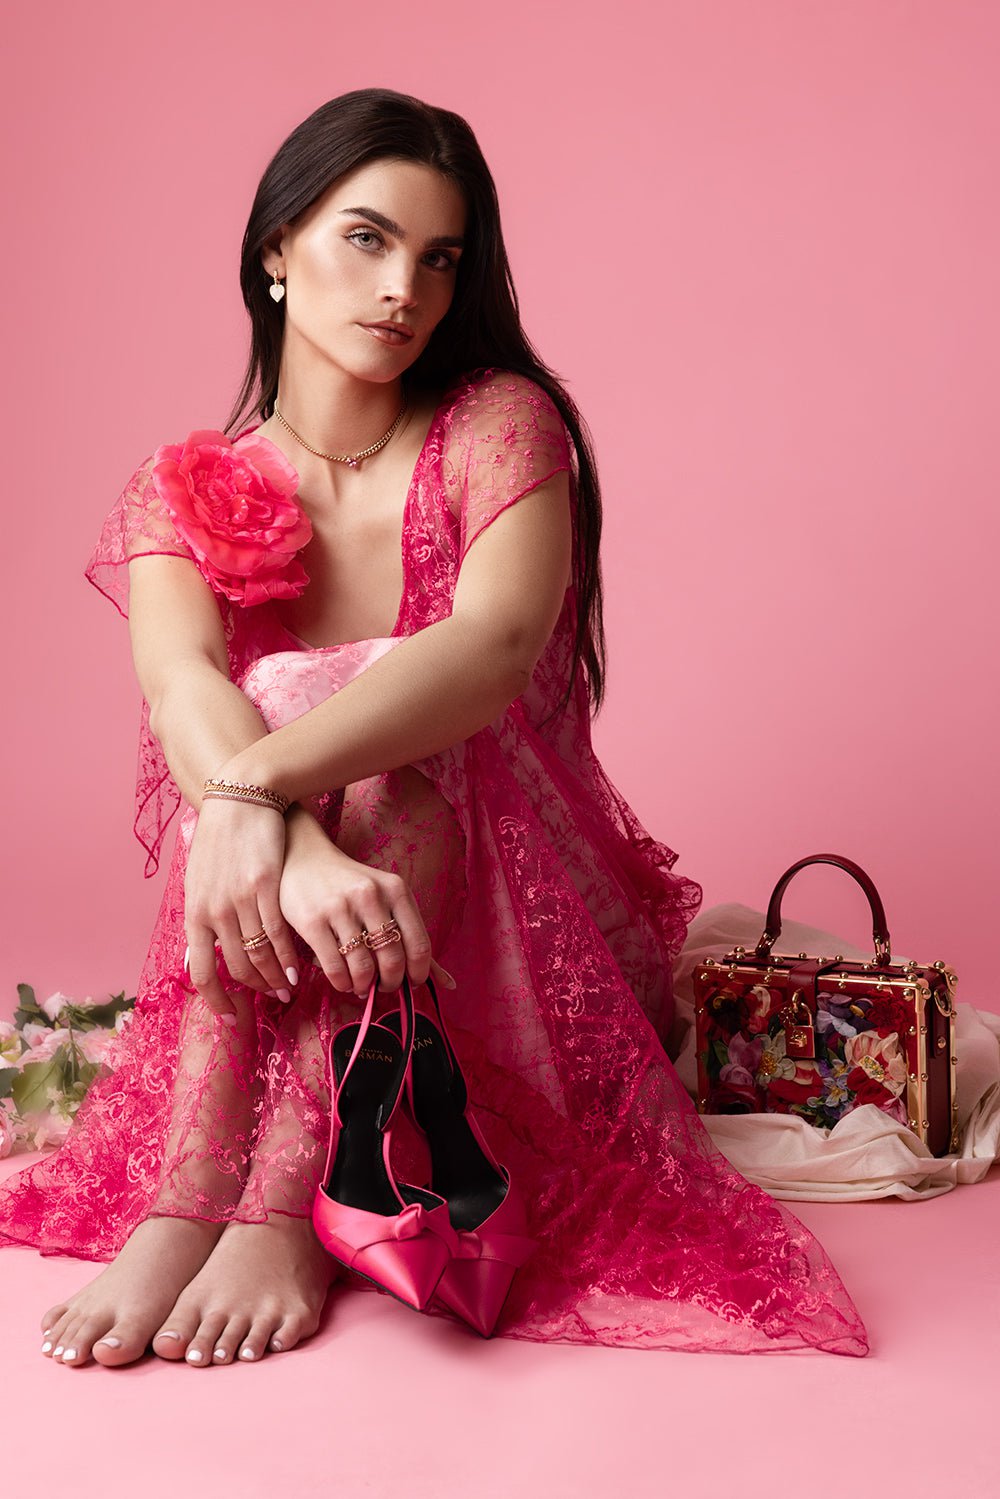 RODARTE-Floral Lace Dress With Ruffle Details-